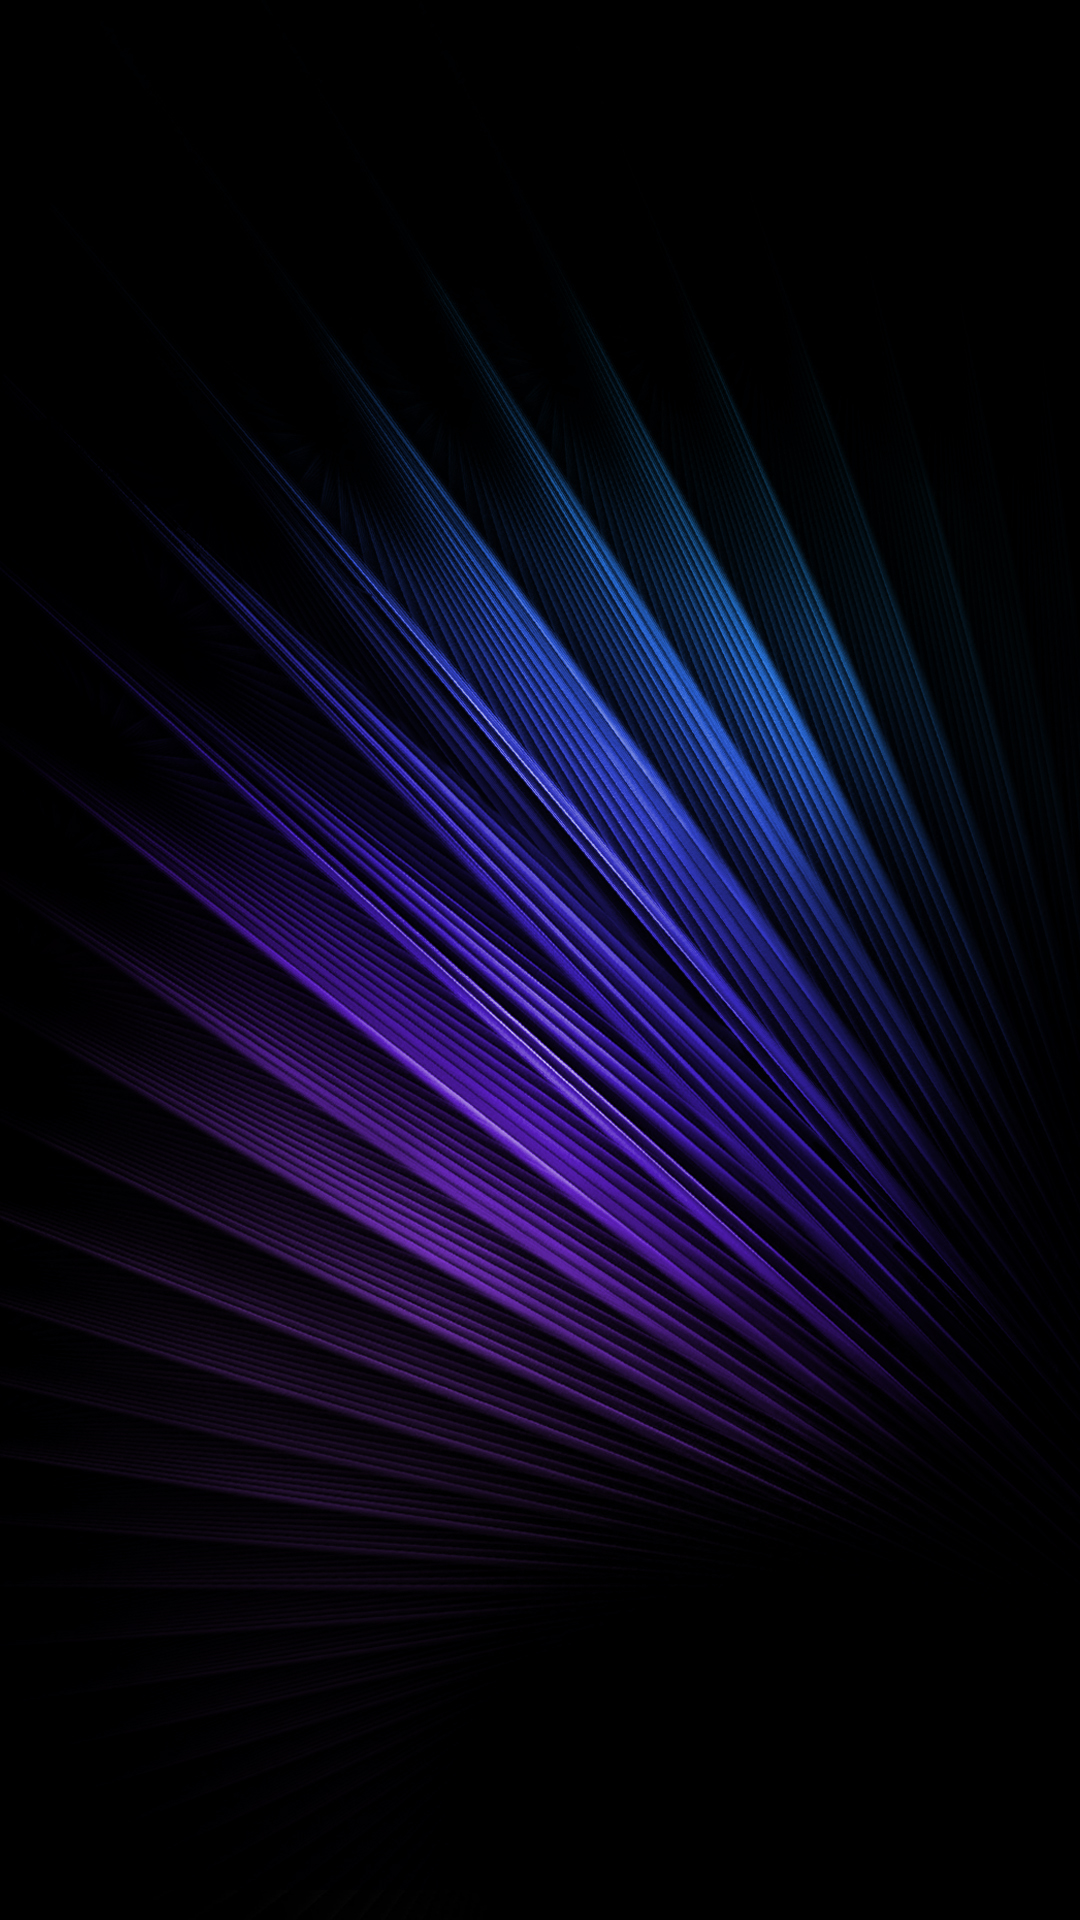 sfondi iphone illusione ottica,blu,nero,viola,viola,blu elettrico